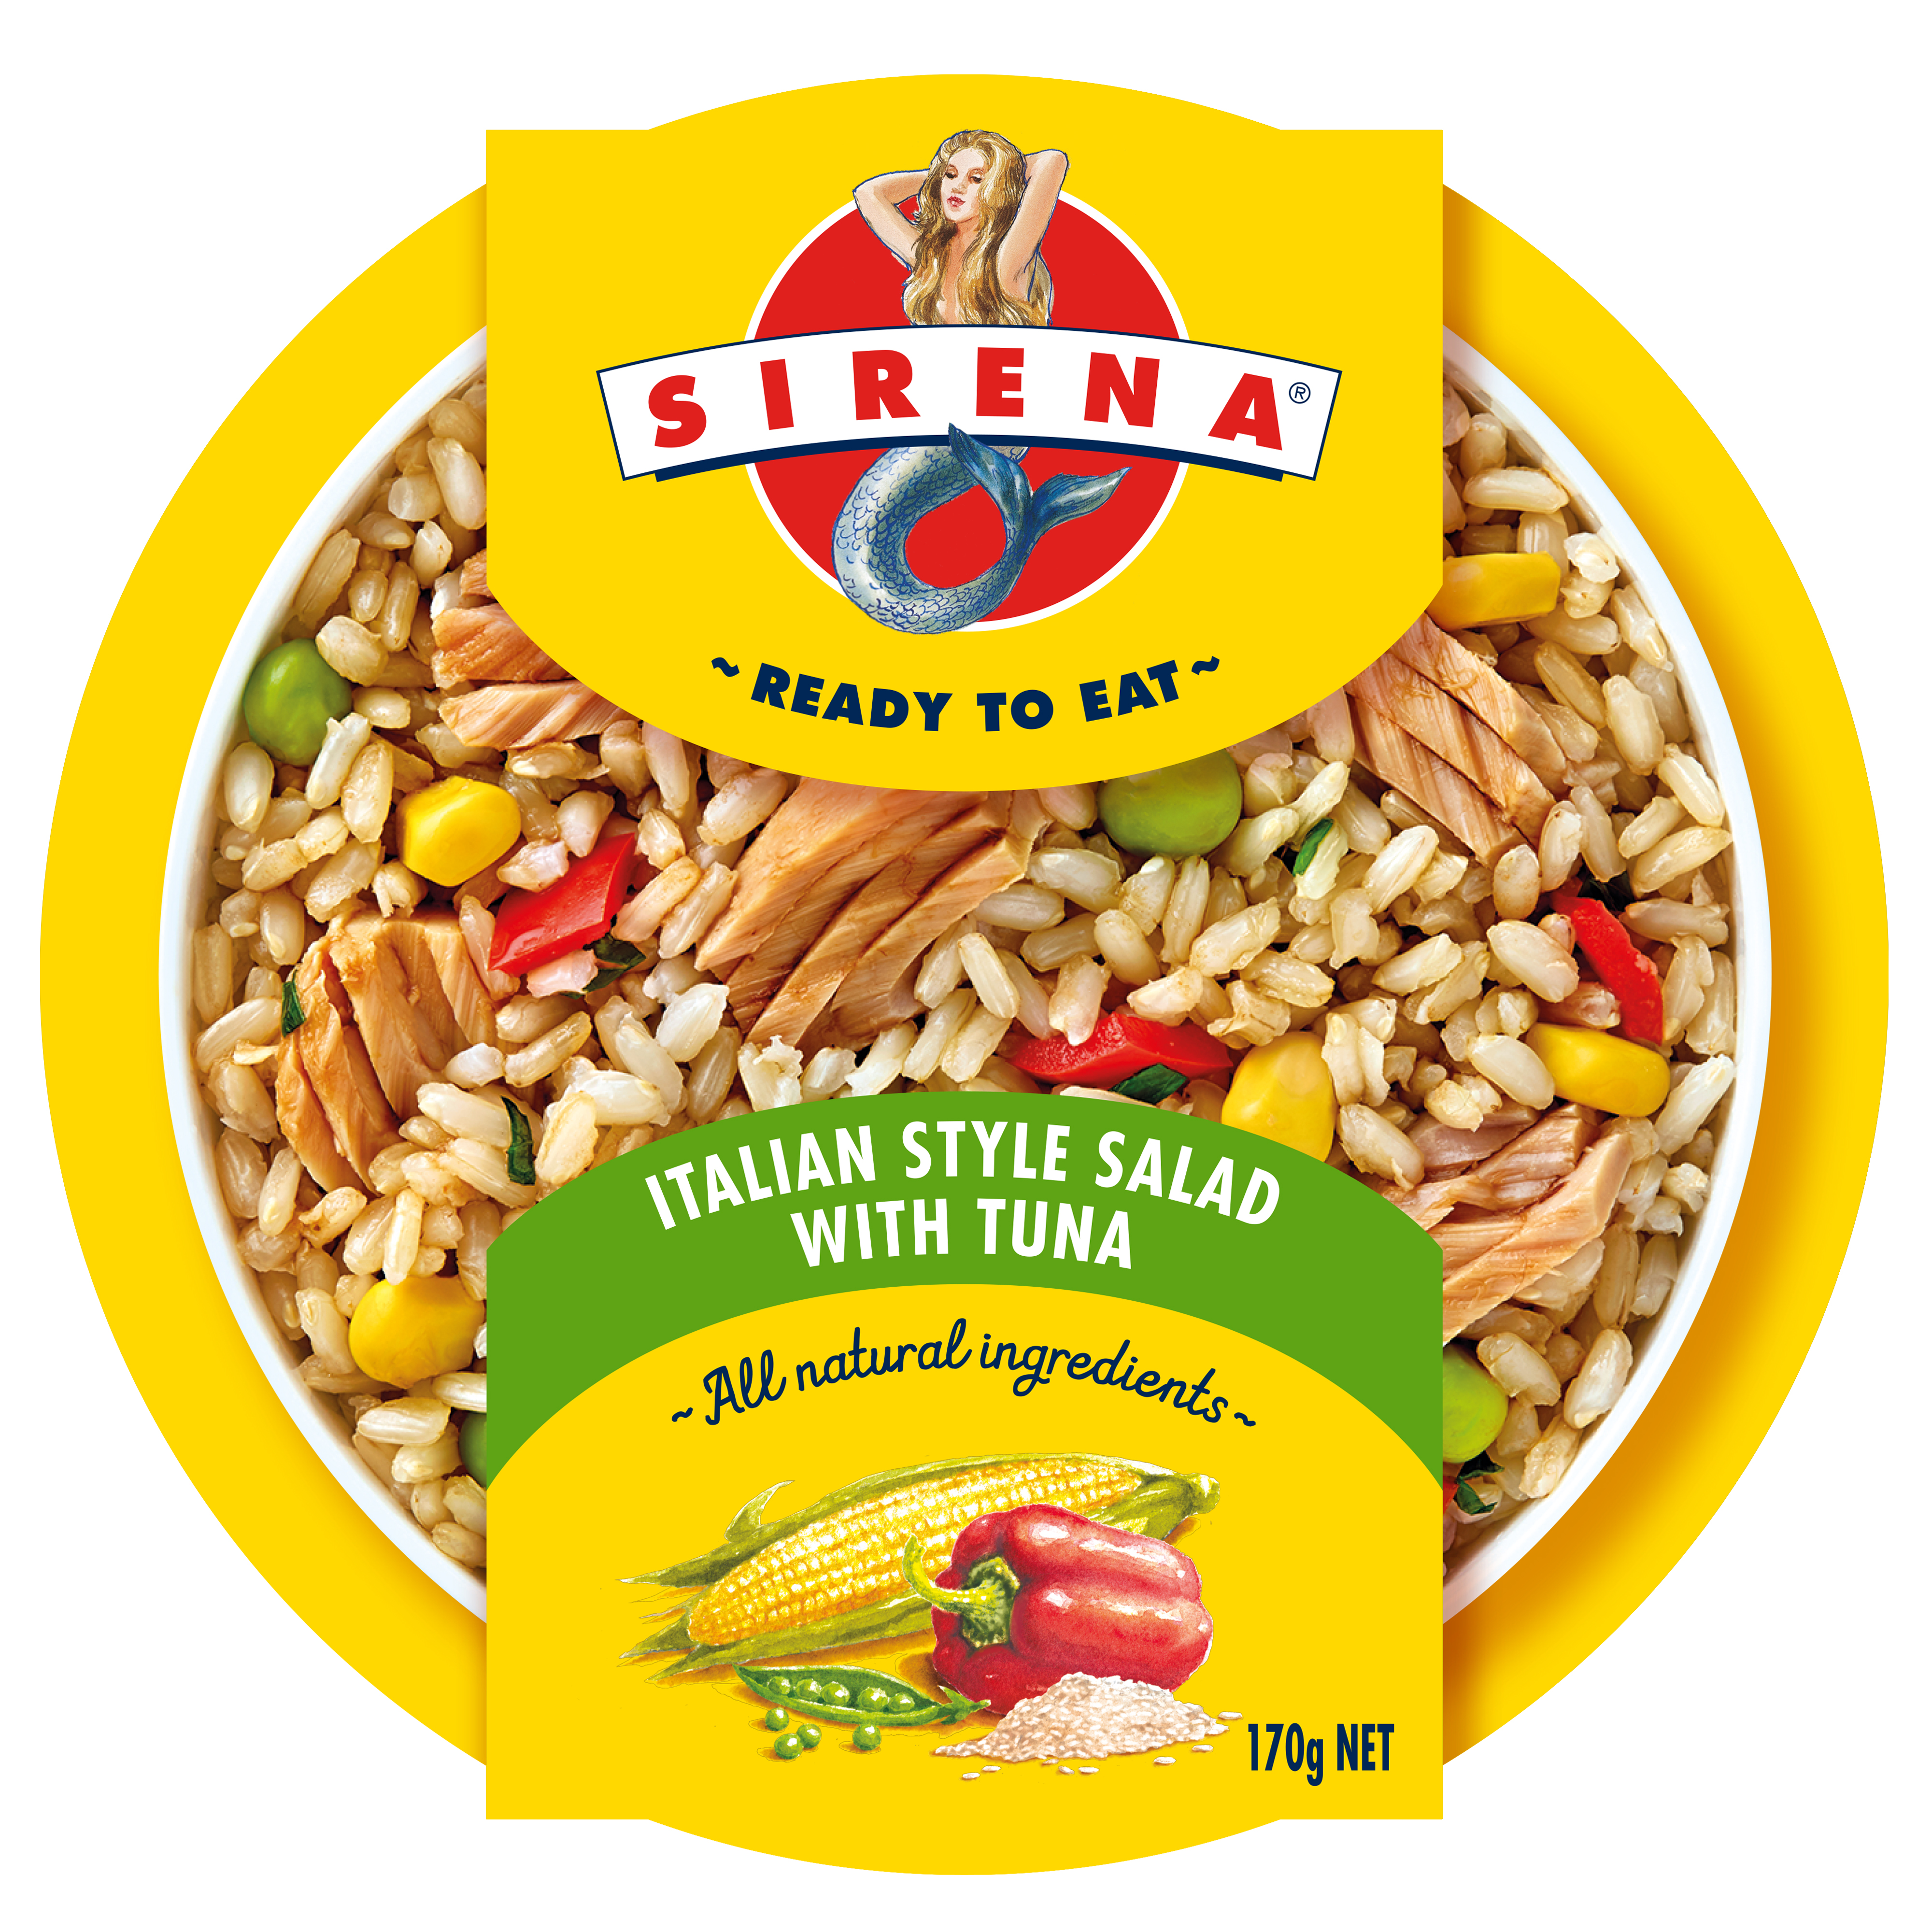 Sirena Ready to Eat Italian Style Salad with Tuna image